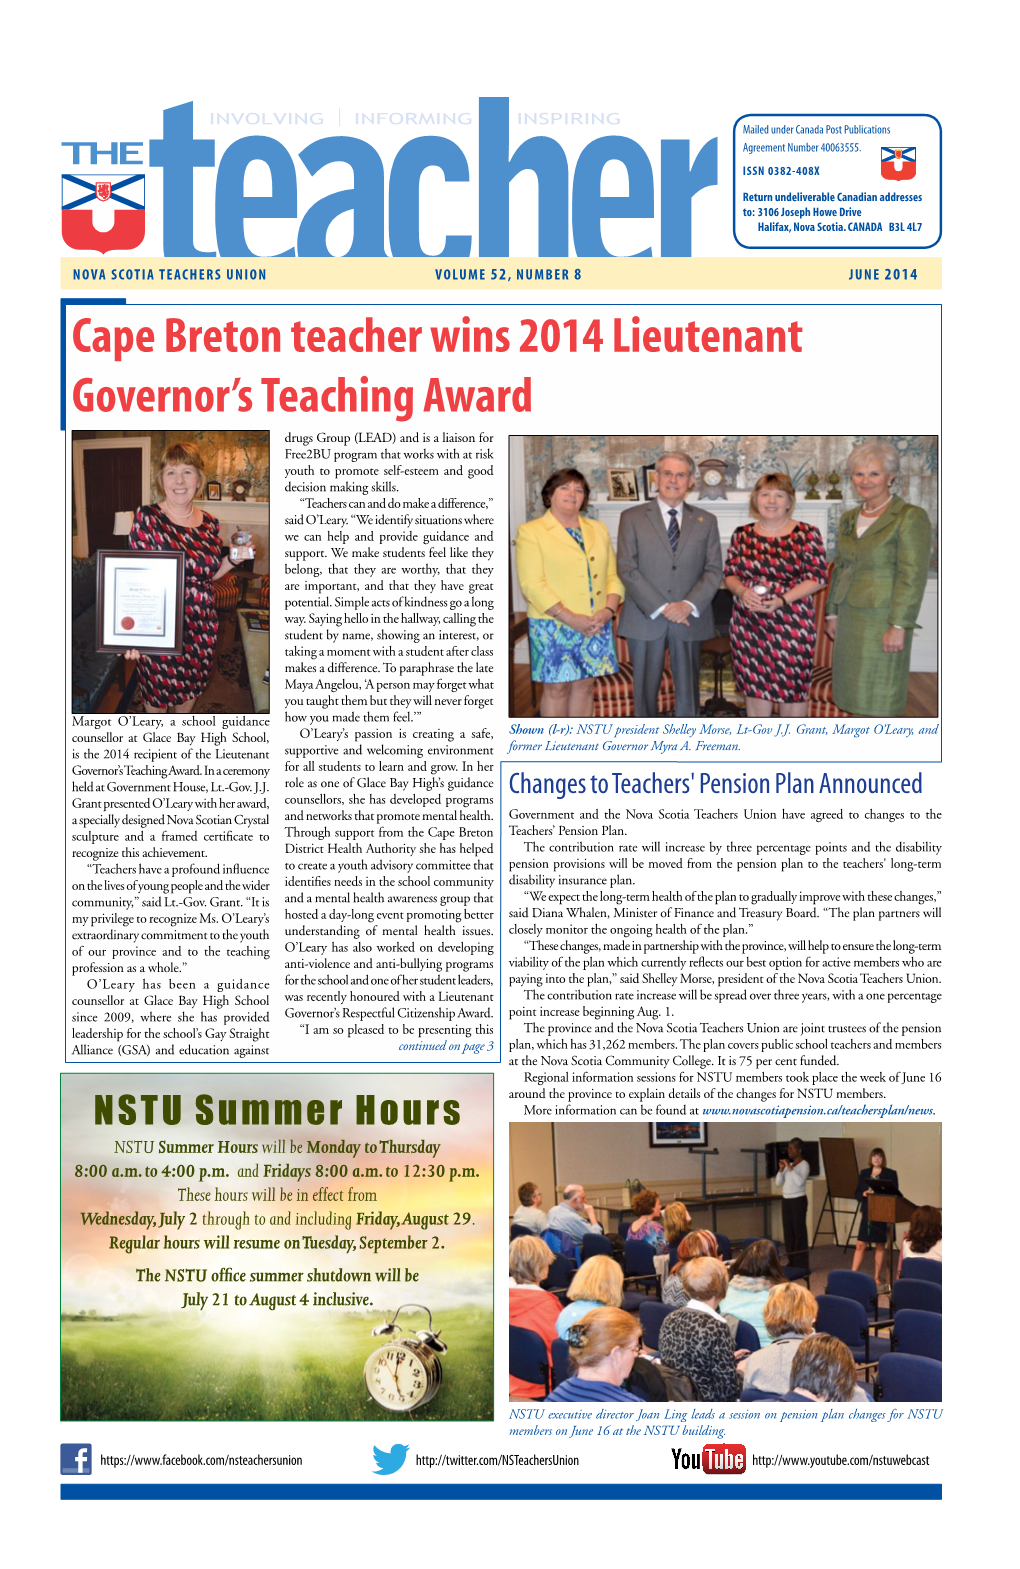 Cape Breton Teacher Wins 2014 Lieutenant Governor's Teaching